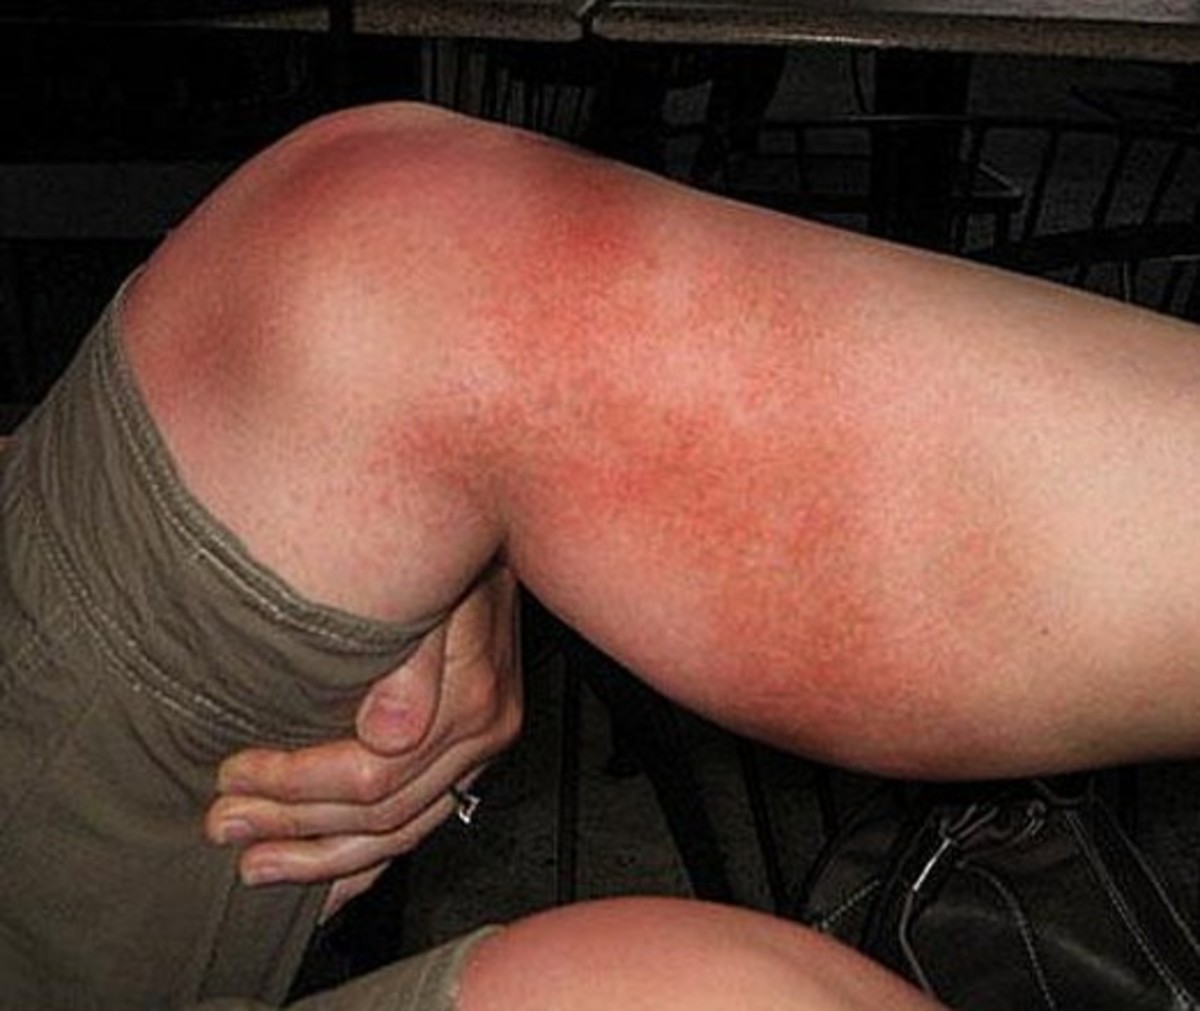 What is heat rash?